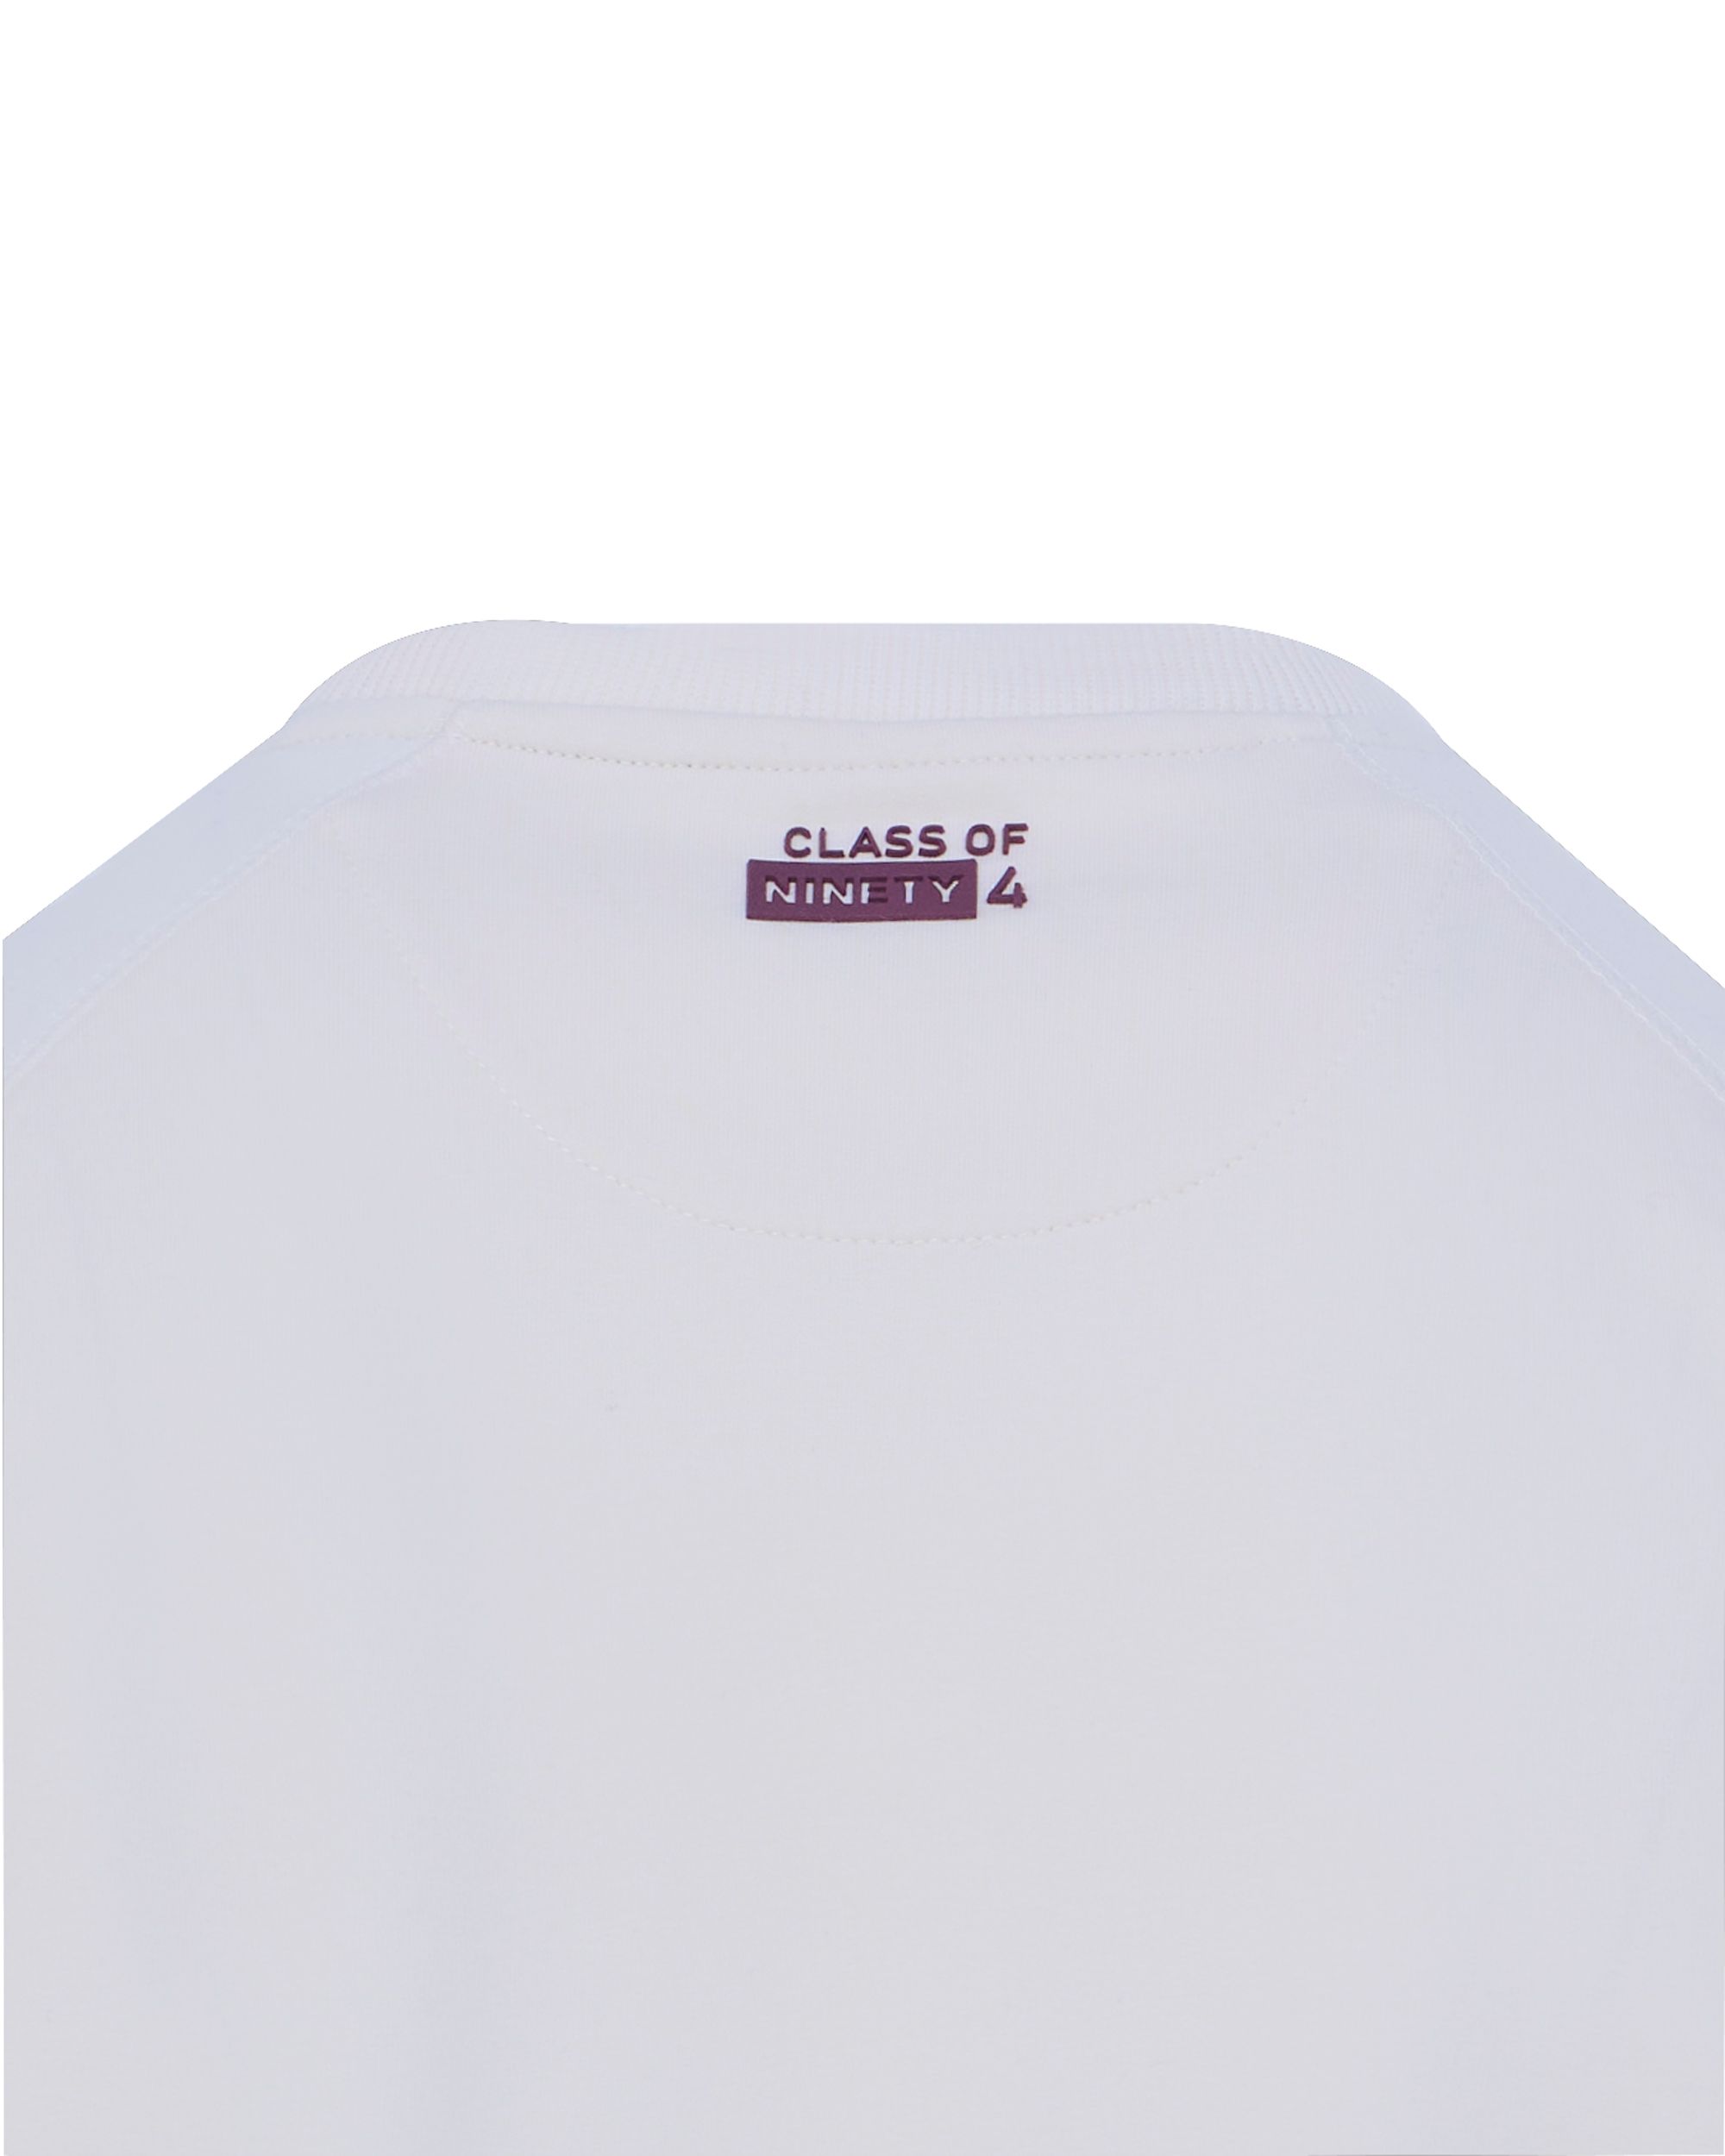 J.C Rags T shirt KM Coconut milk 084871-002-46